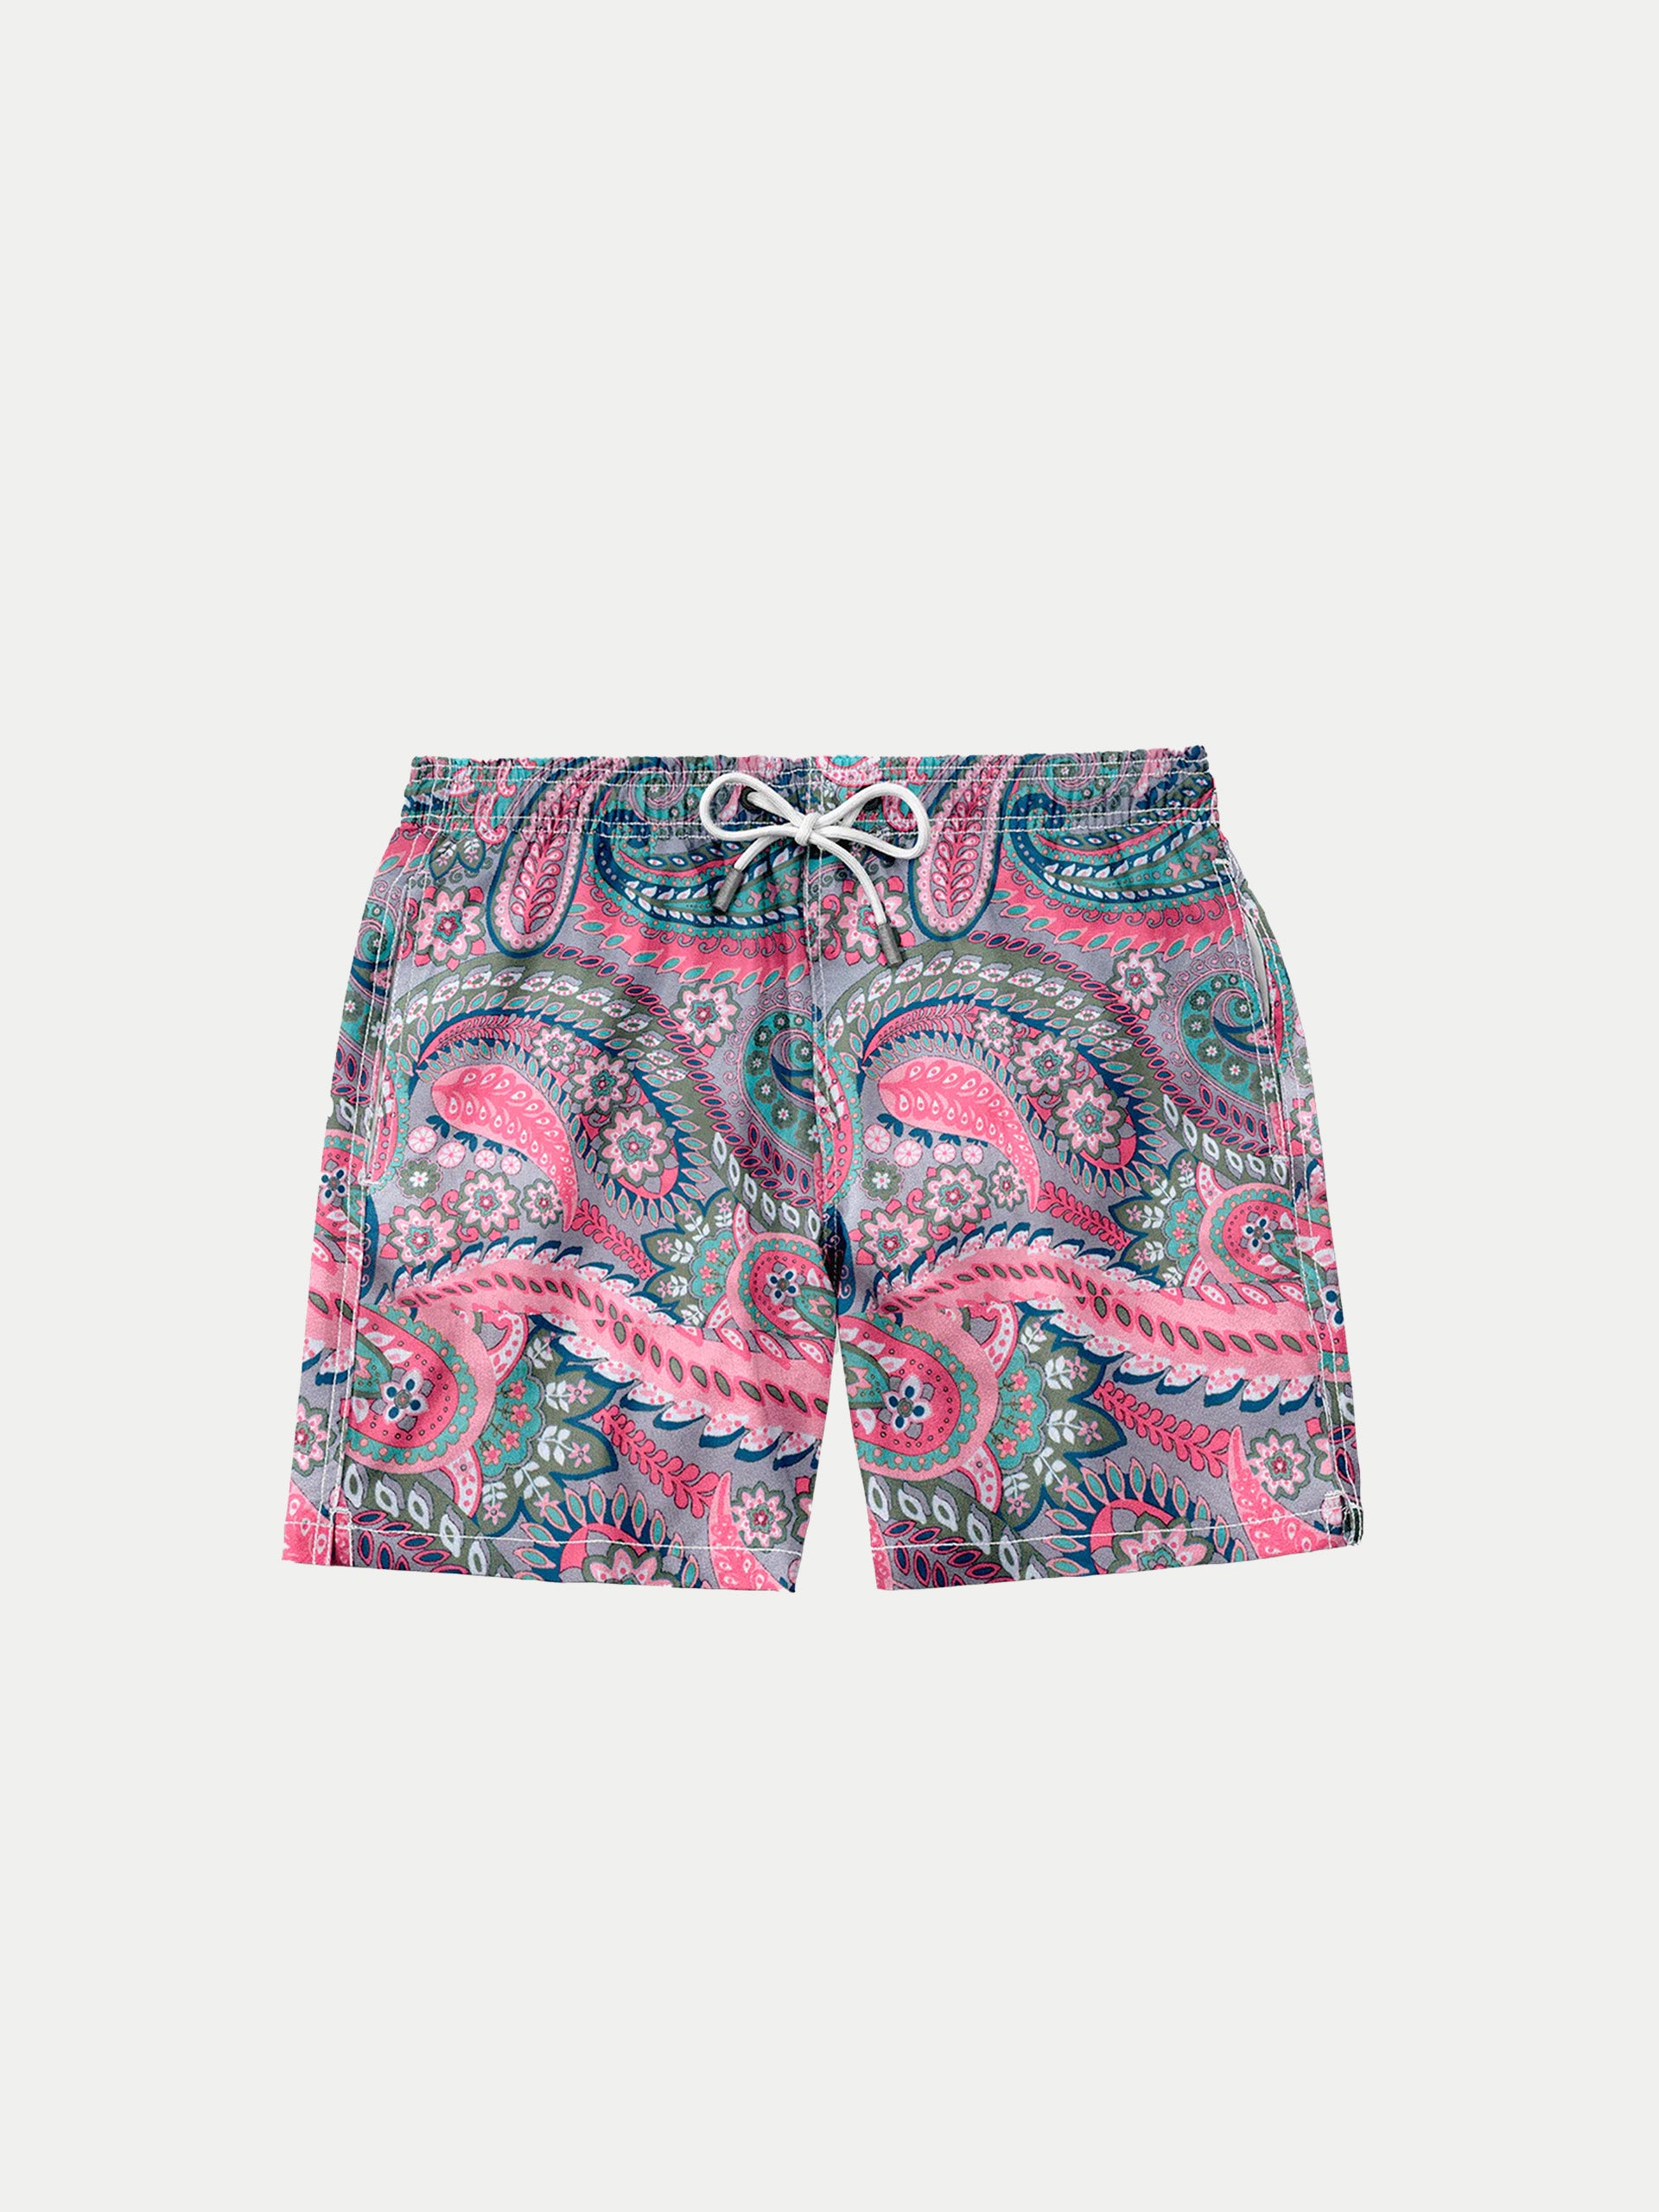 'Pink Paisley' Boys Swim Shorts by 98 Coast Av